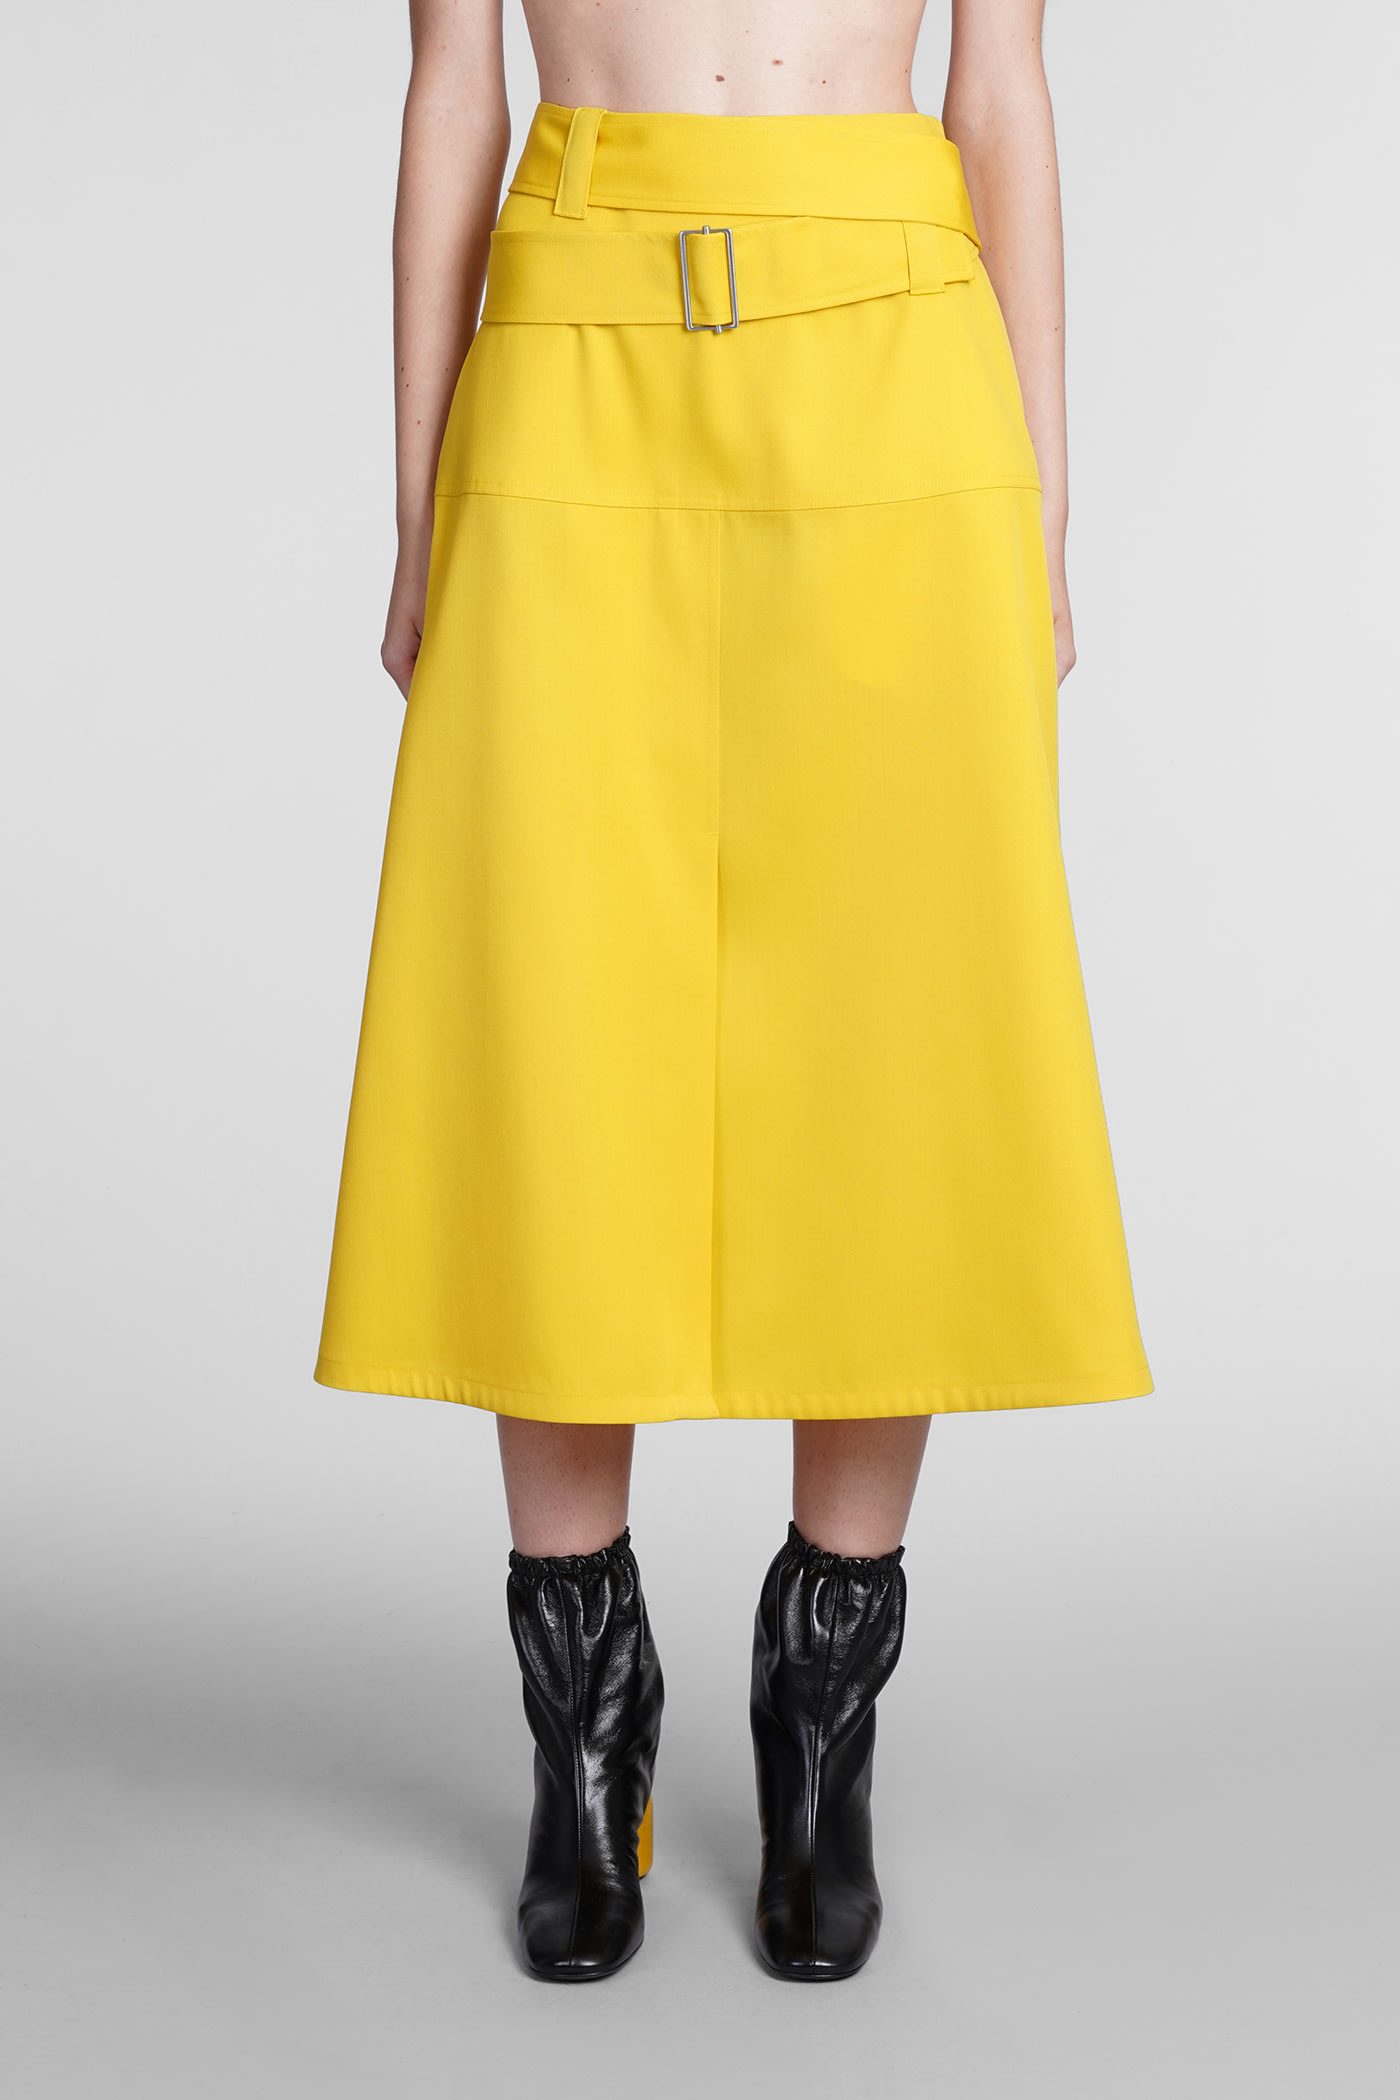 Jil Sander Skirt In Yellow Wool